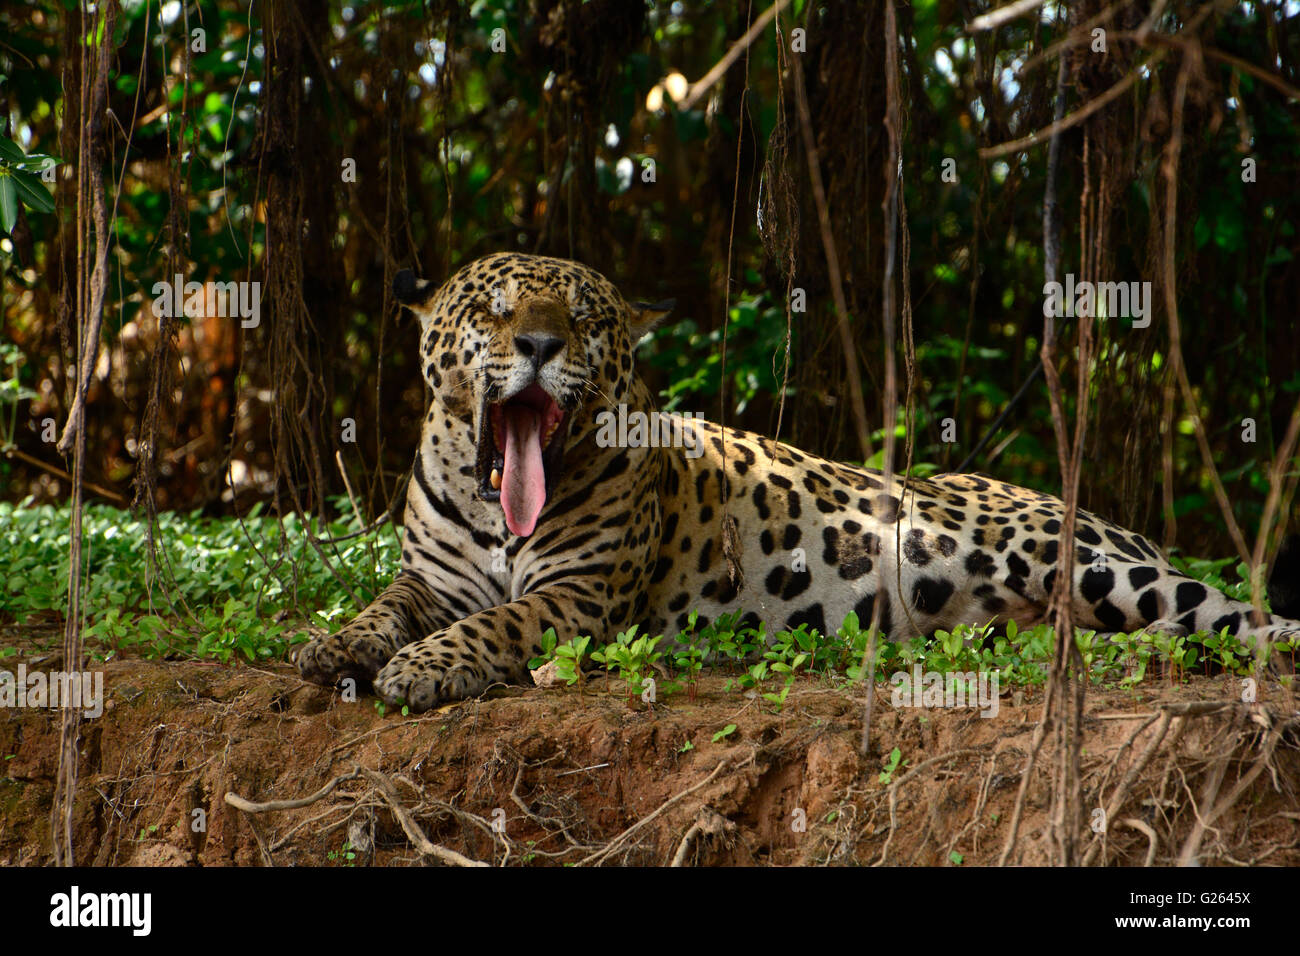 Jaguar (Panthera onca) die Region, die am Ufer des Flusses Três Irmãos im Landgut Mato Grosso liegt, wird Pantanal genannt. Stockfoto